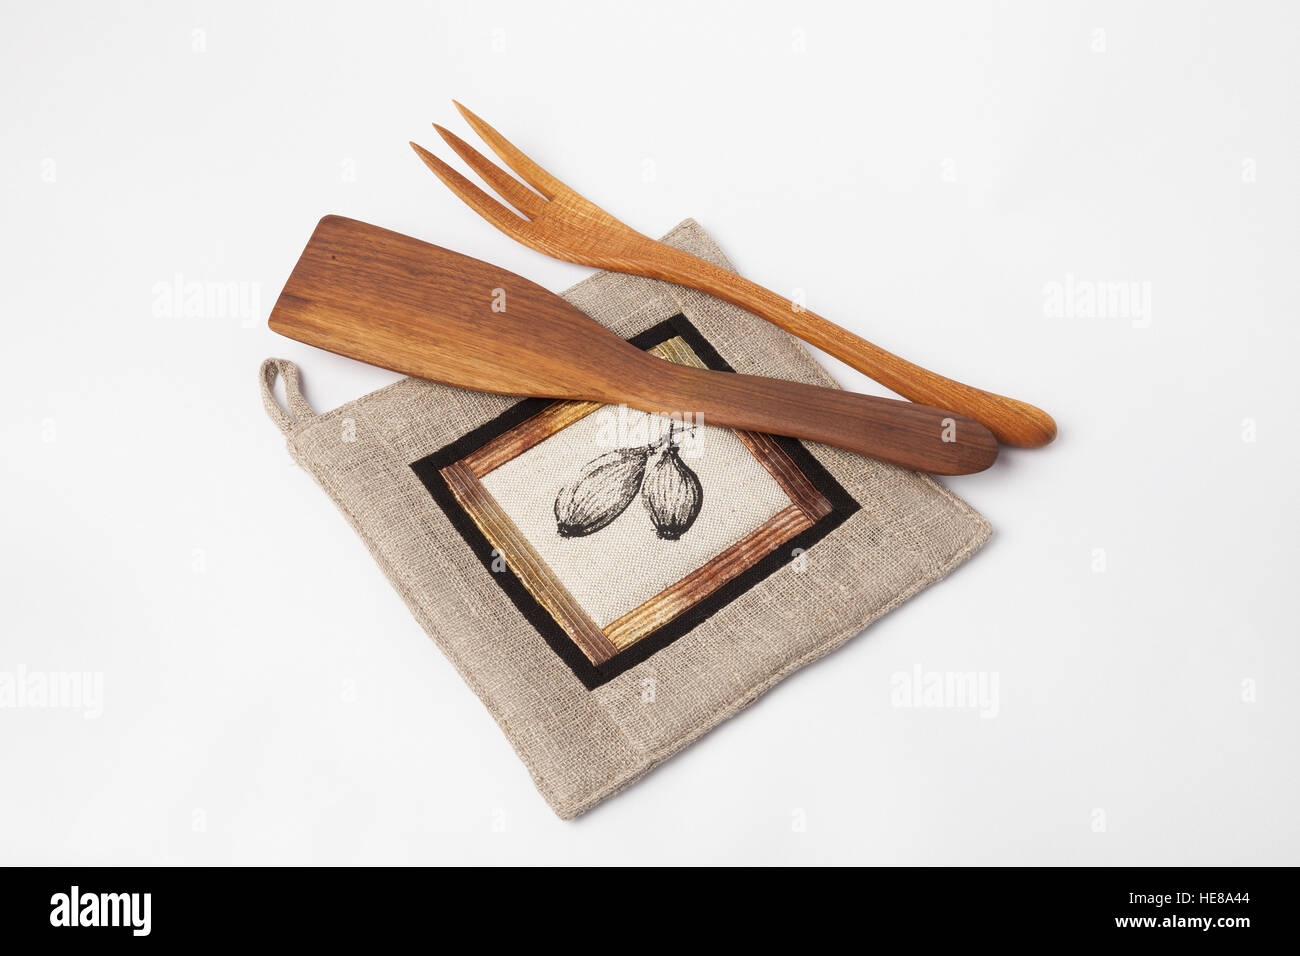 Kitchen utensils - linen potholder, wooden tools isolated on white Stock Photo